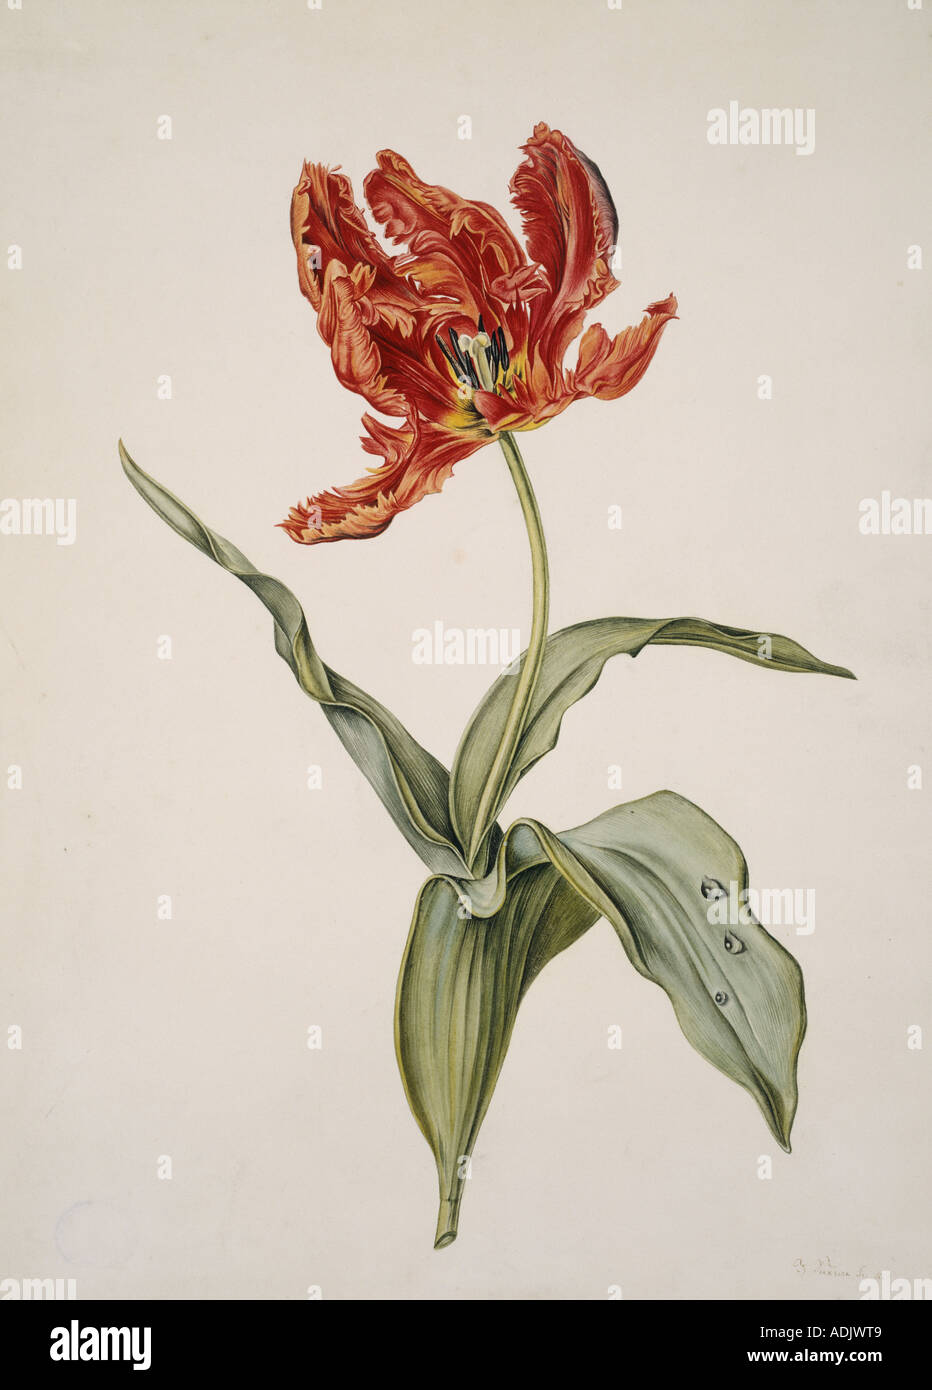 Tulipa gesneriana tulip Stock Photo